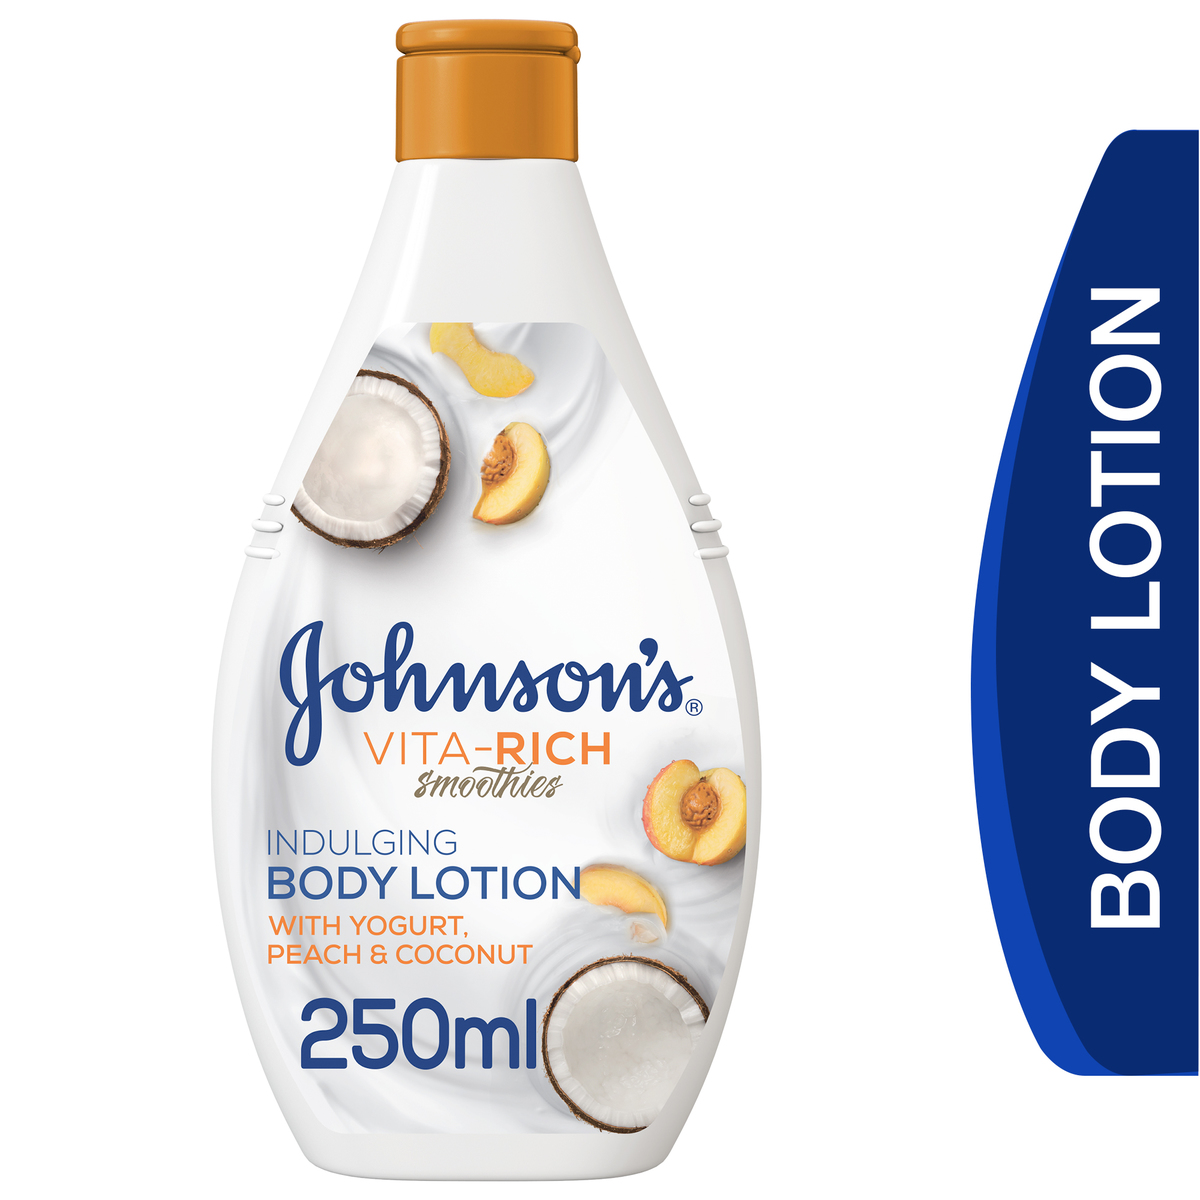 Johnson's Body Lotion Vita-Rich Smoothies Indulging 250 ml